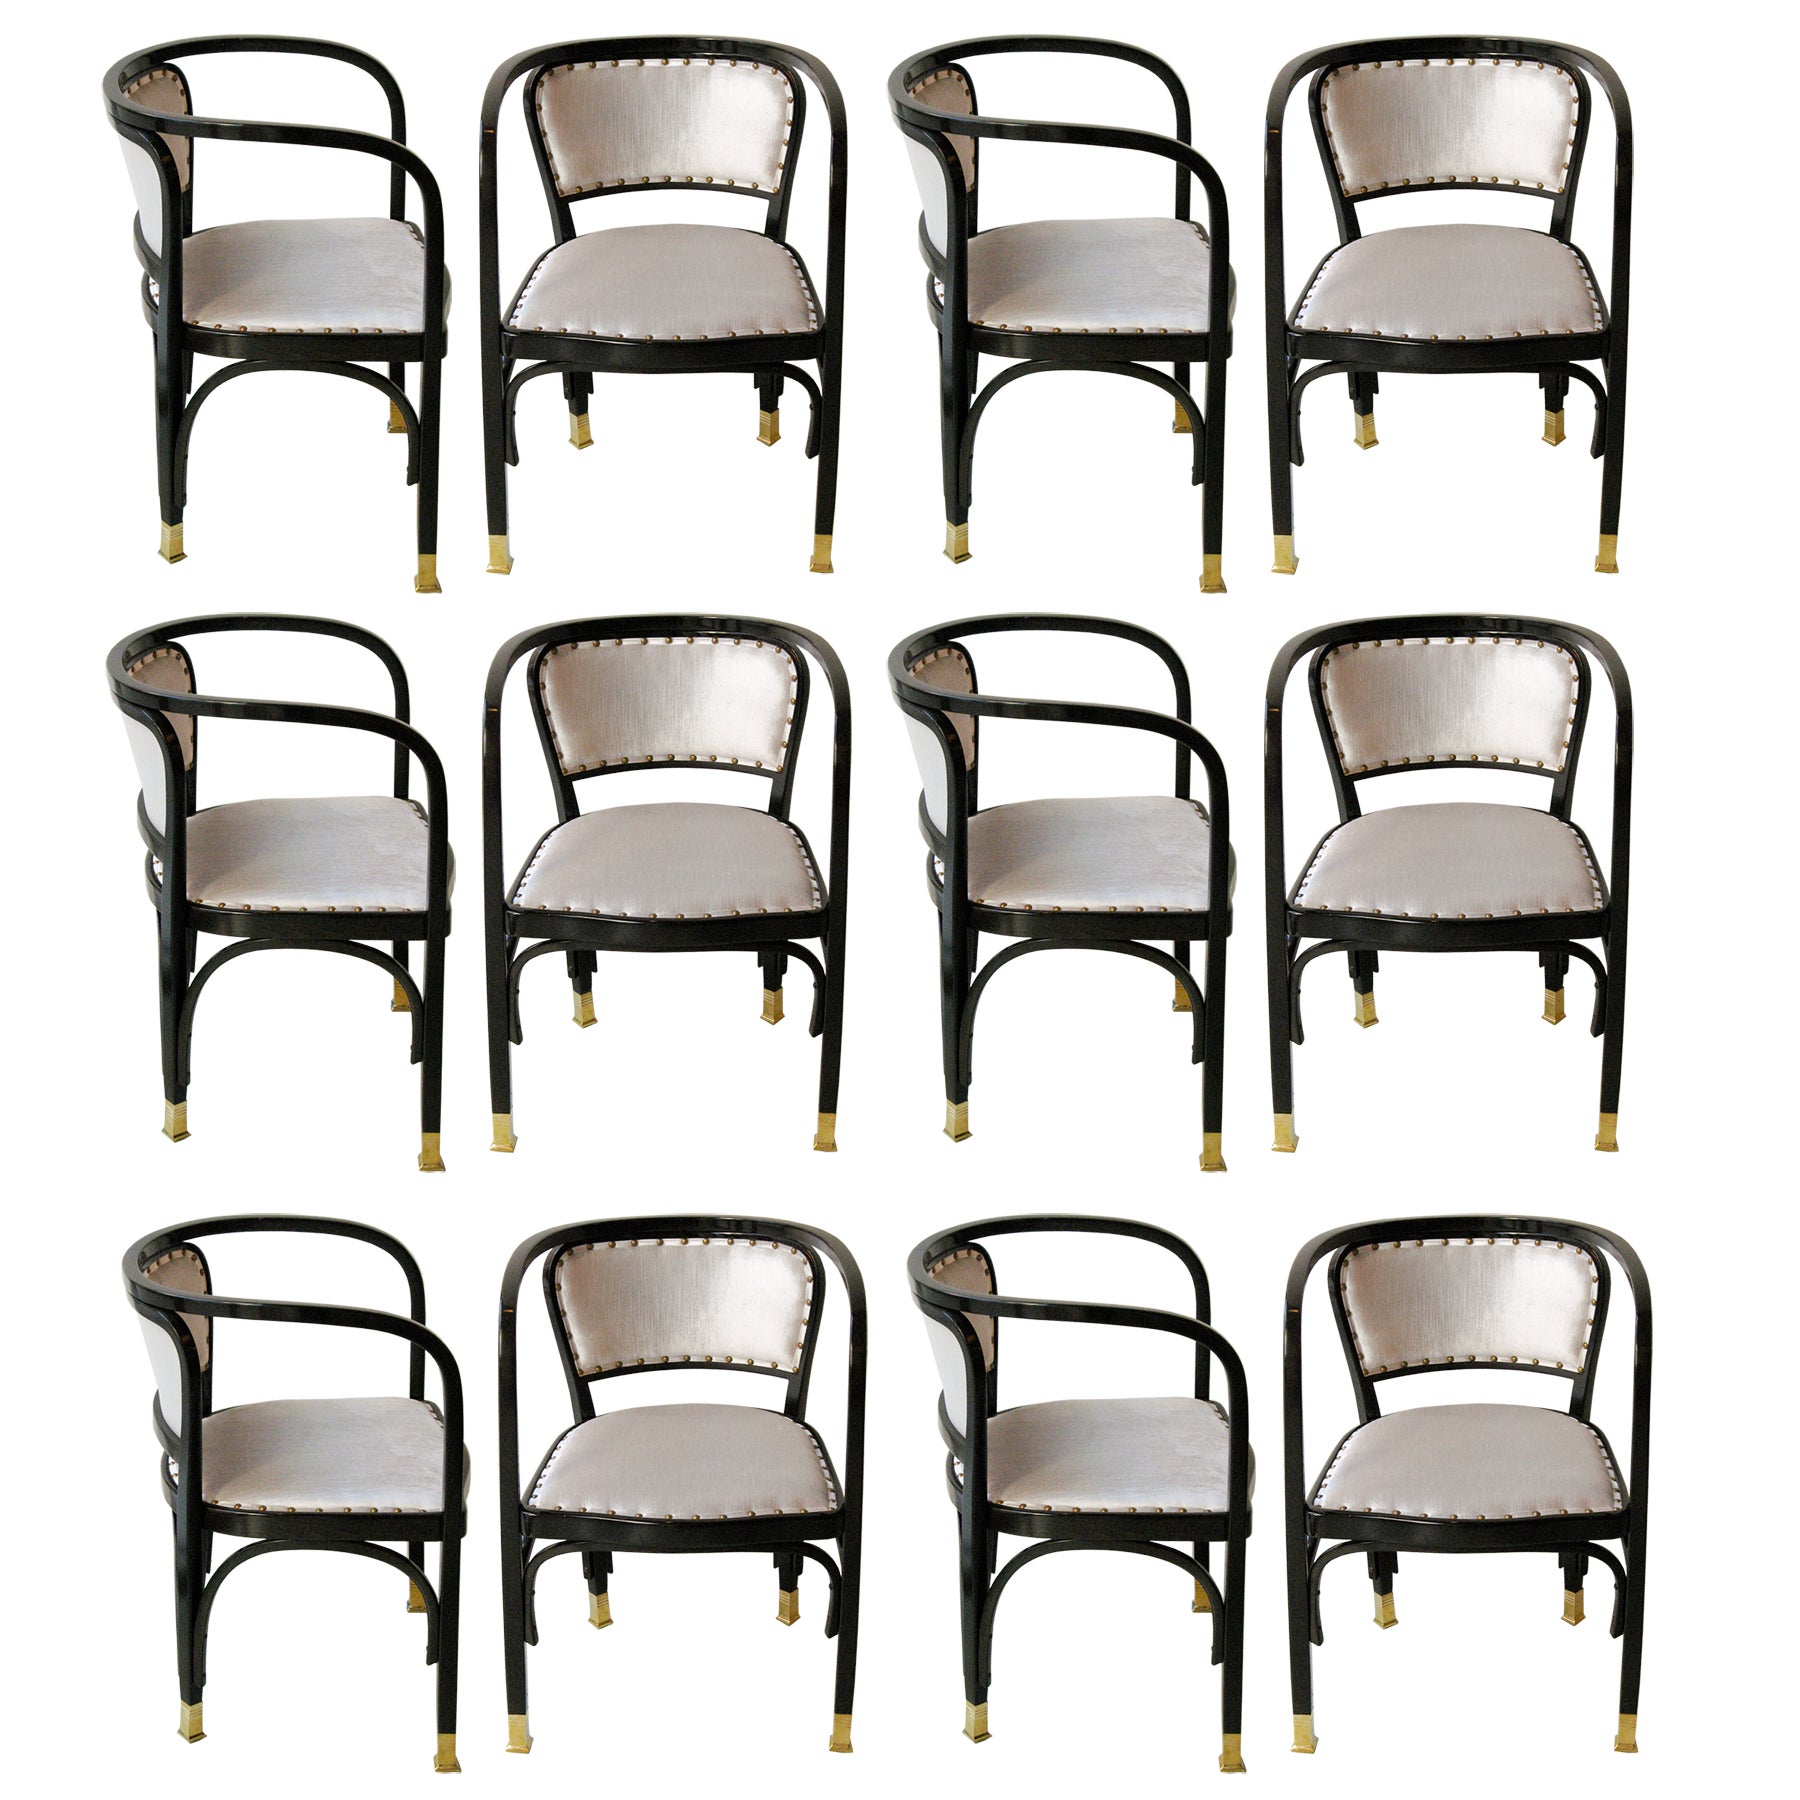 12 armchairs by Gustav Siegel